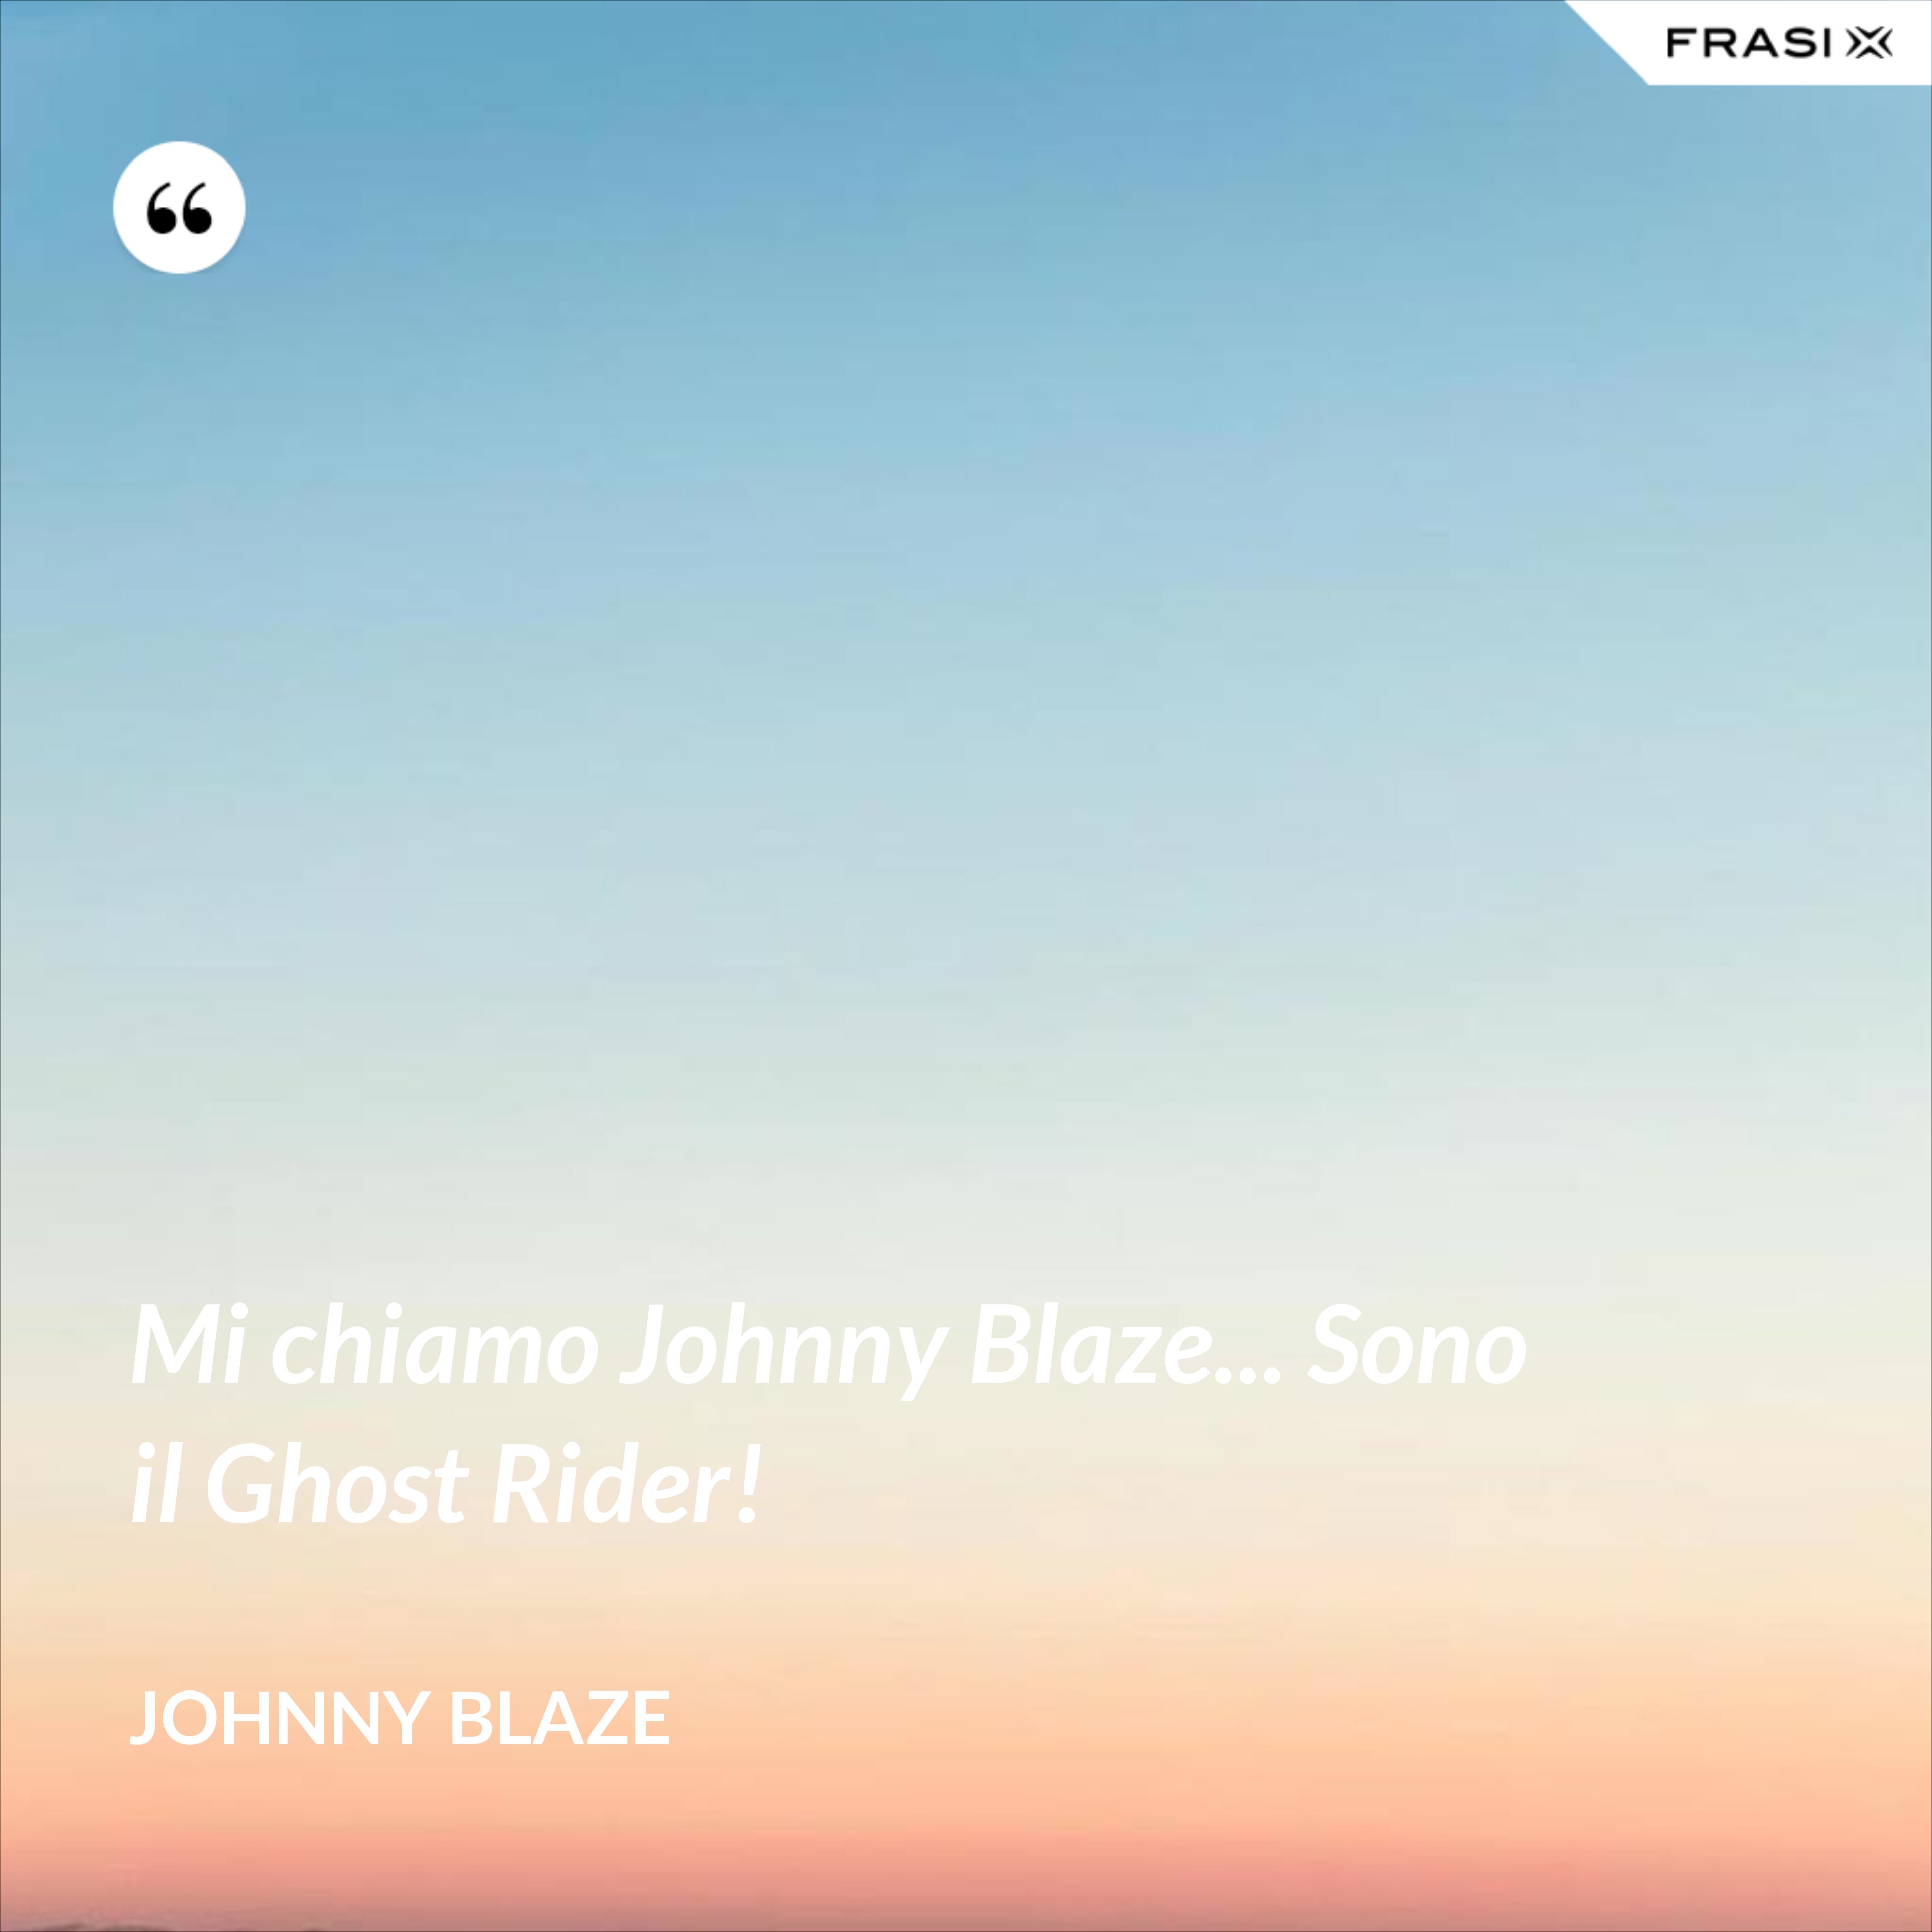 Mi chiamo Johnny Blaze... Sono il Ghost Rider! - Johnny Blaze